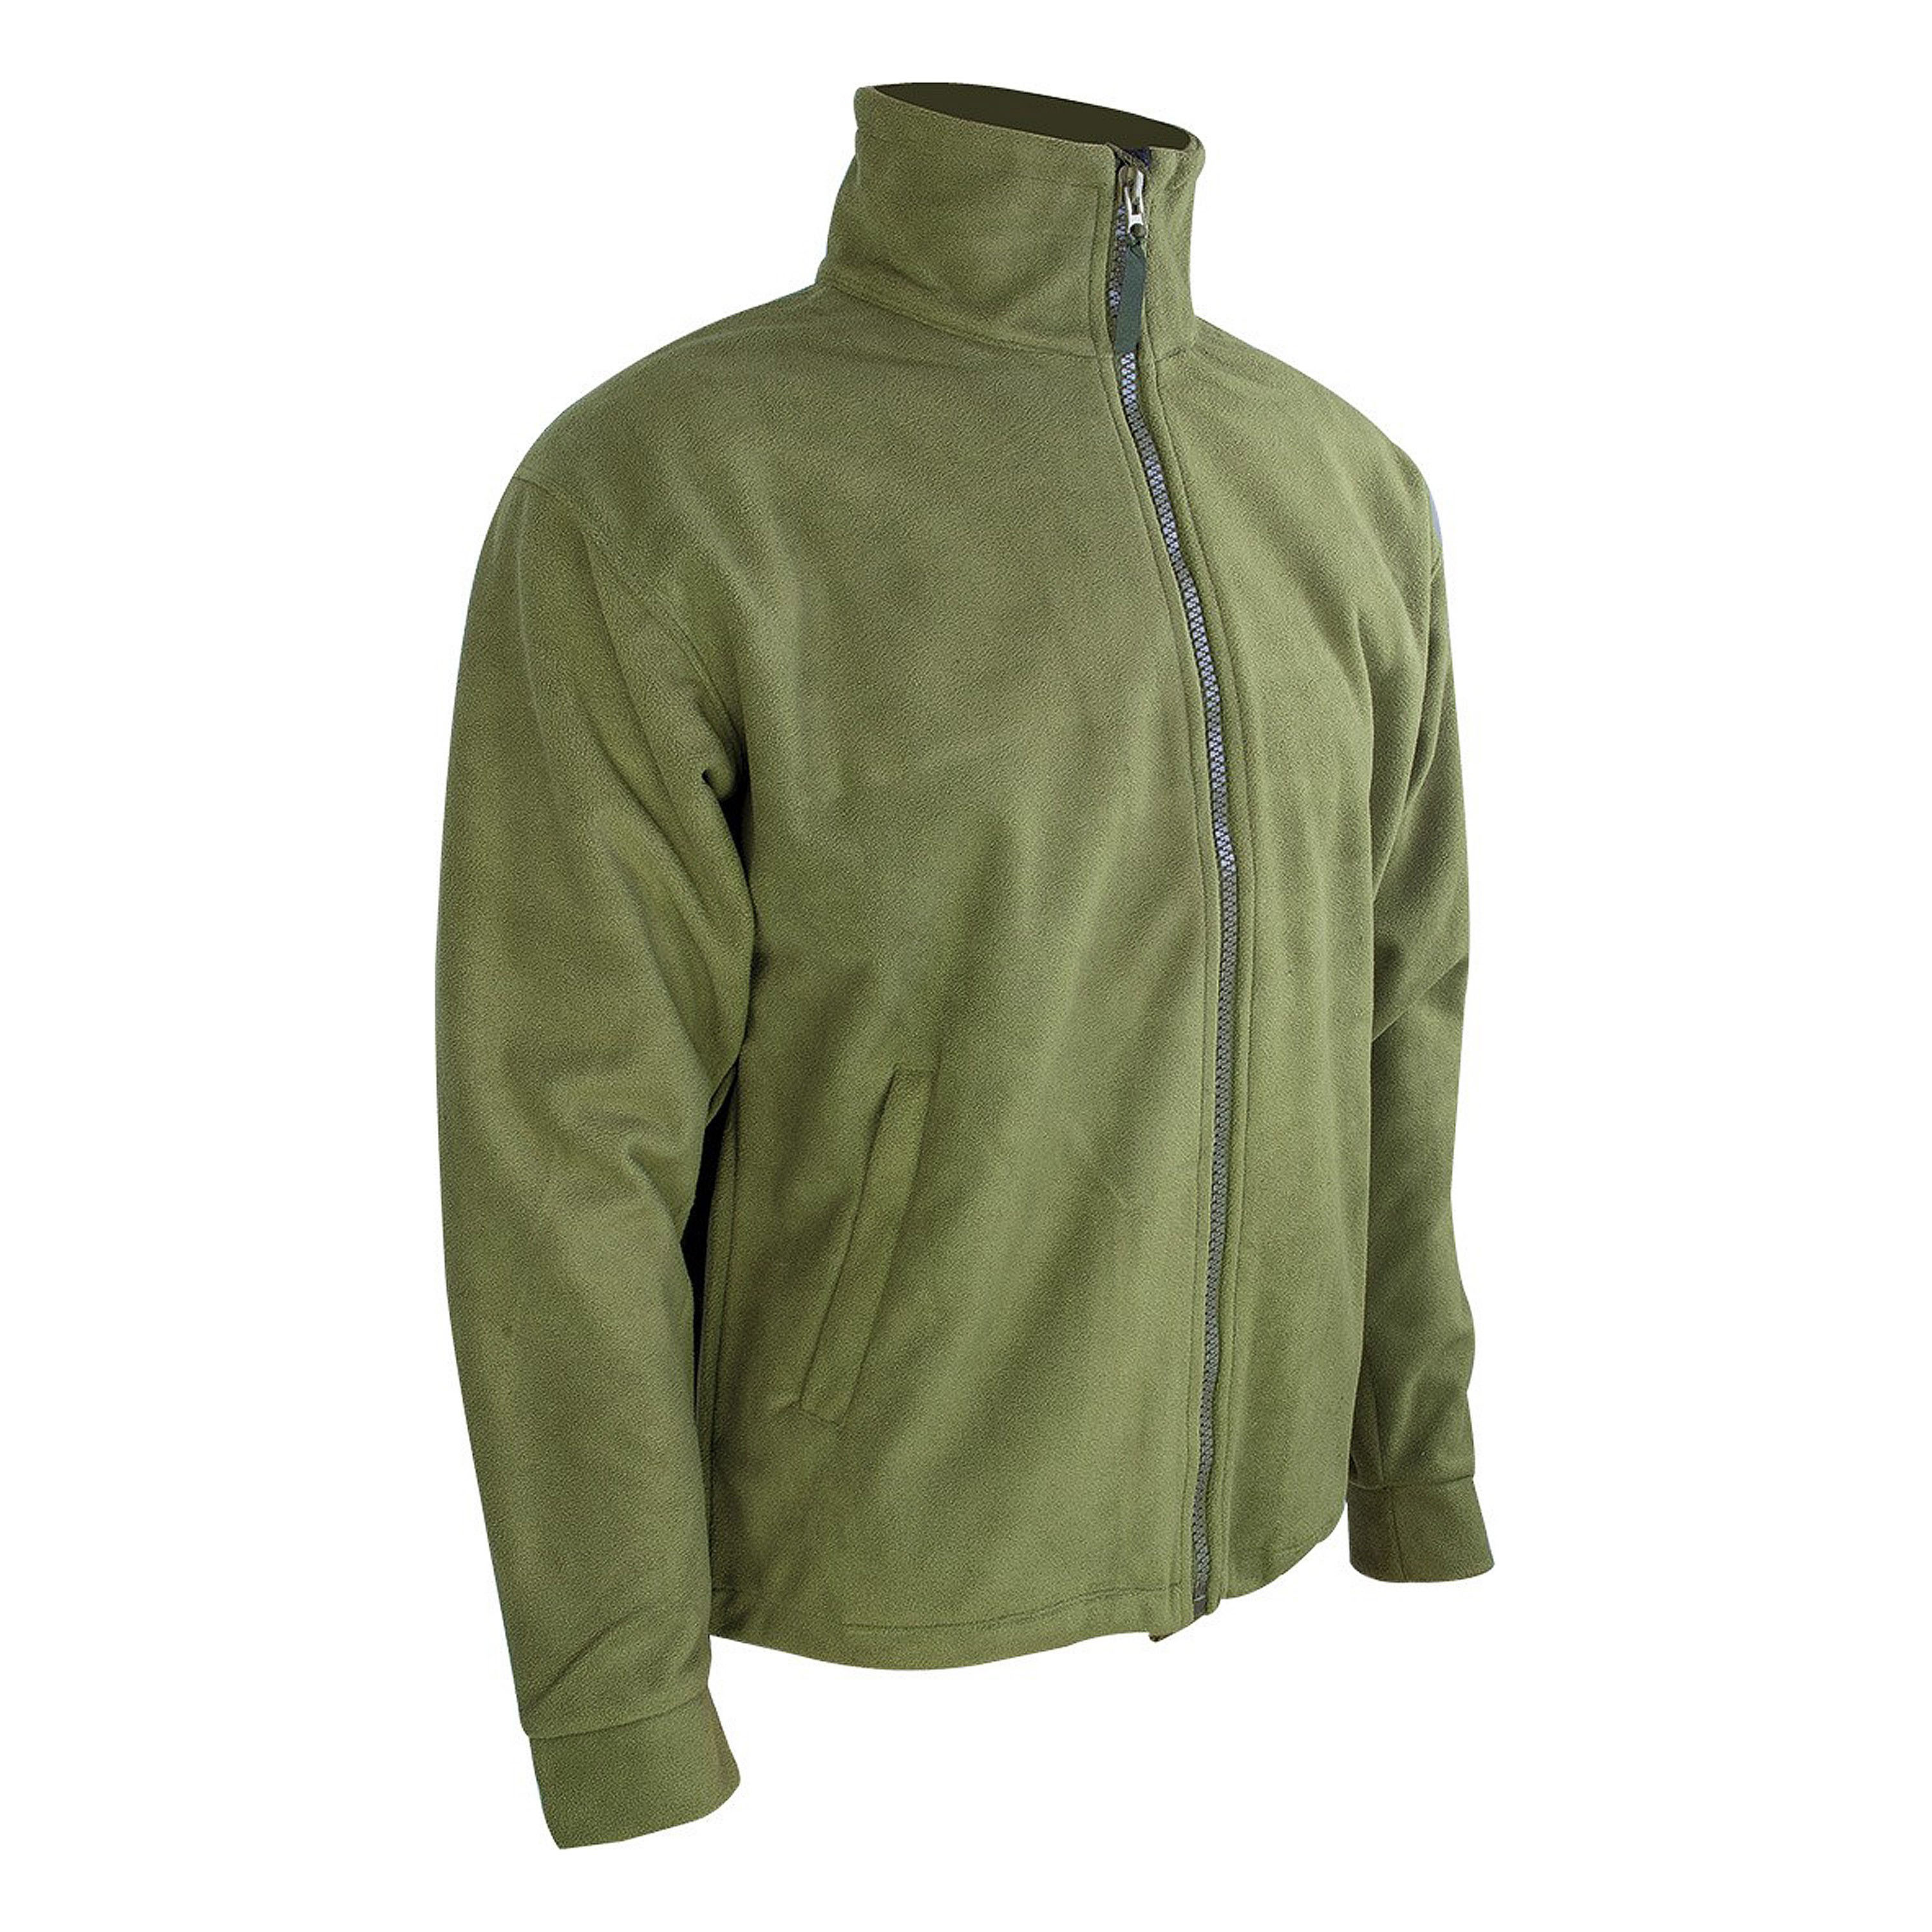 Purchase the Highlander Fleece Jacket Thor olive by ASMC